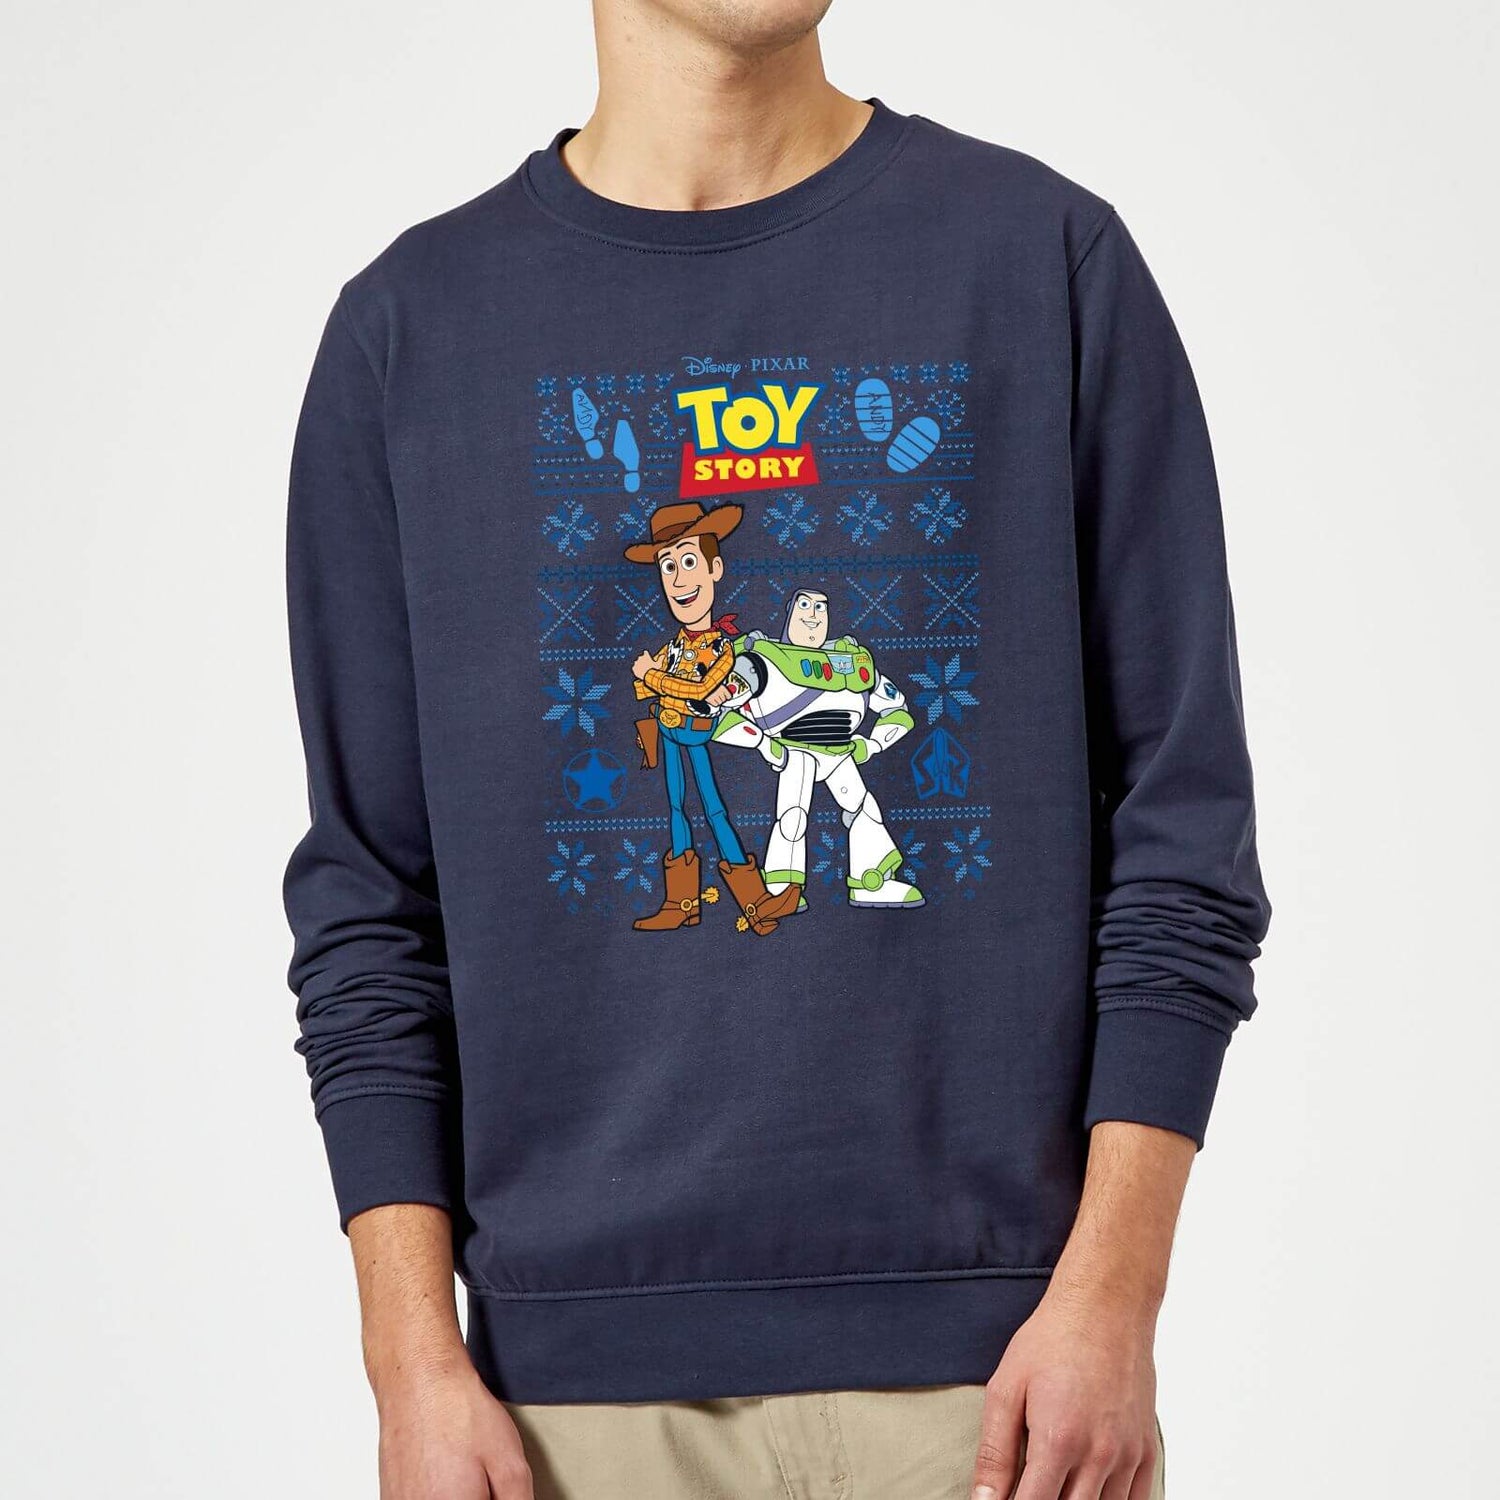 Pull de Noël Homme Disney Toy Story - Bleu Marine Clothing